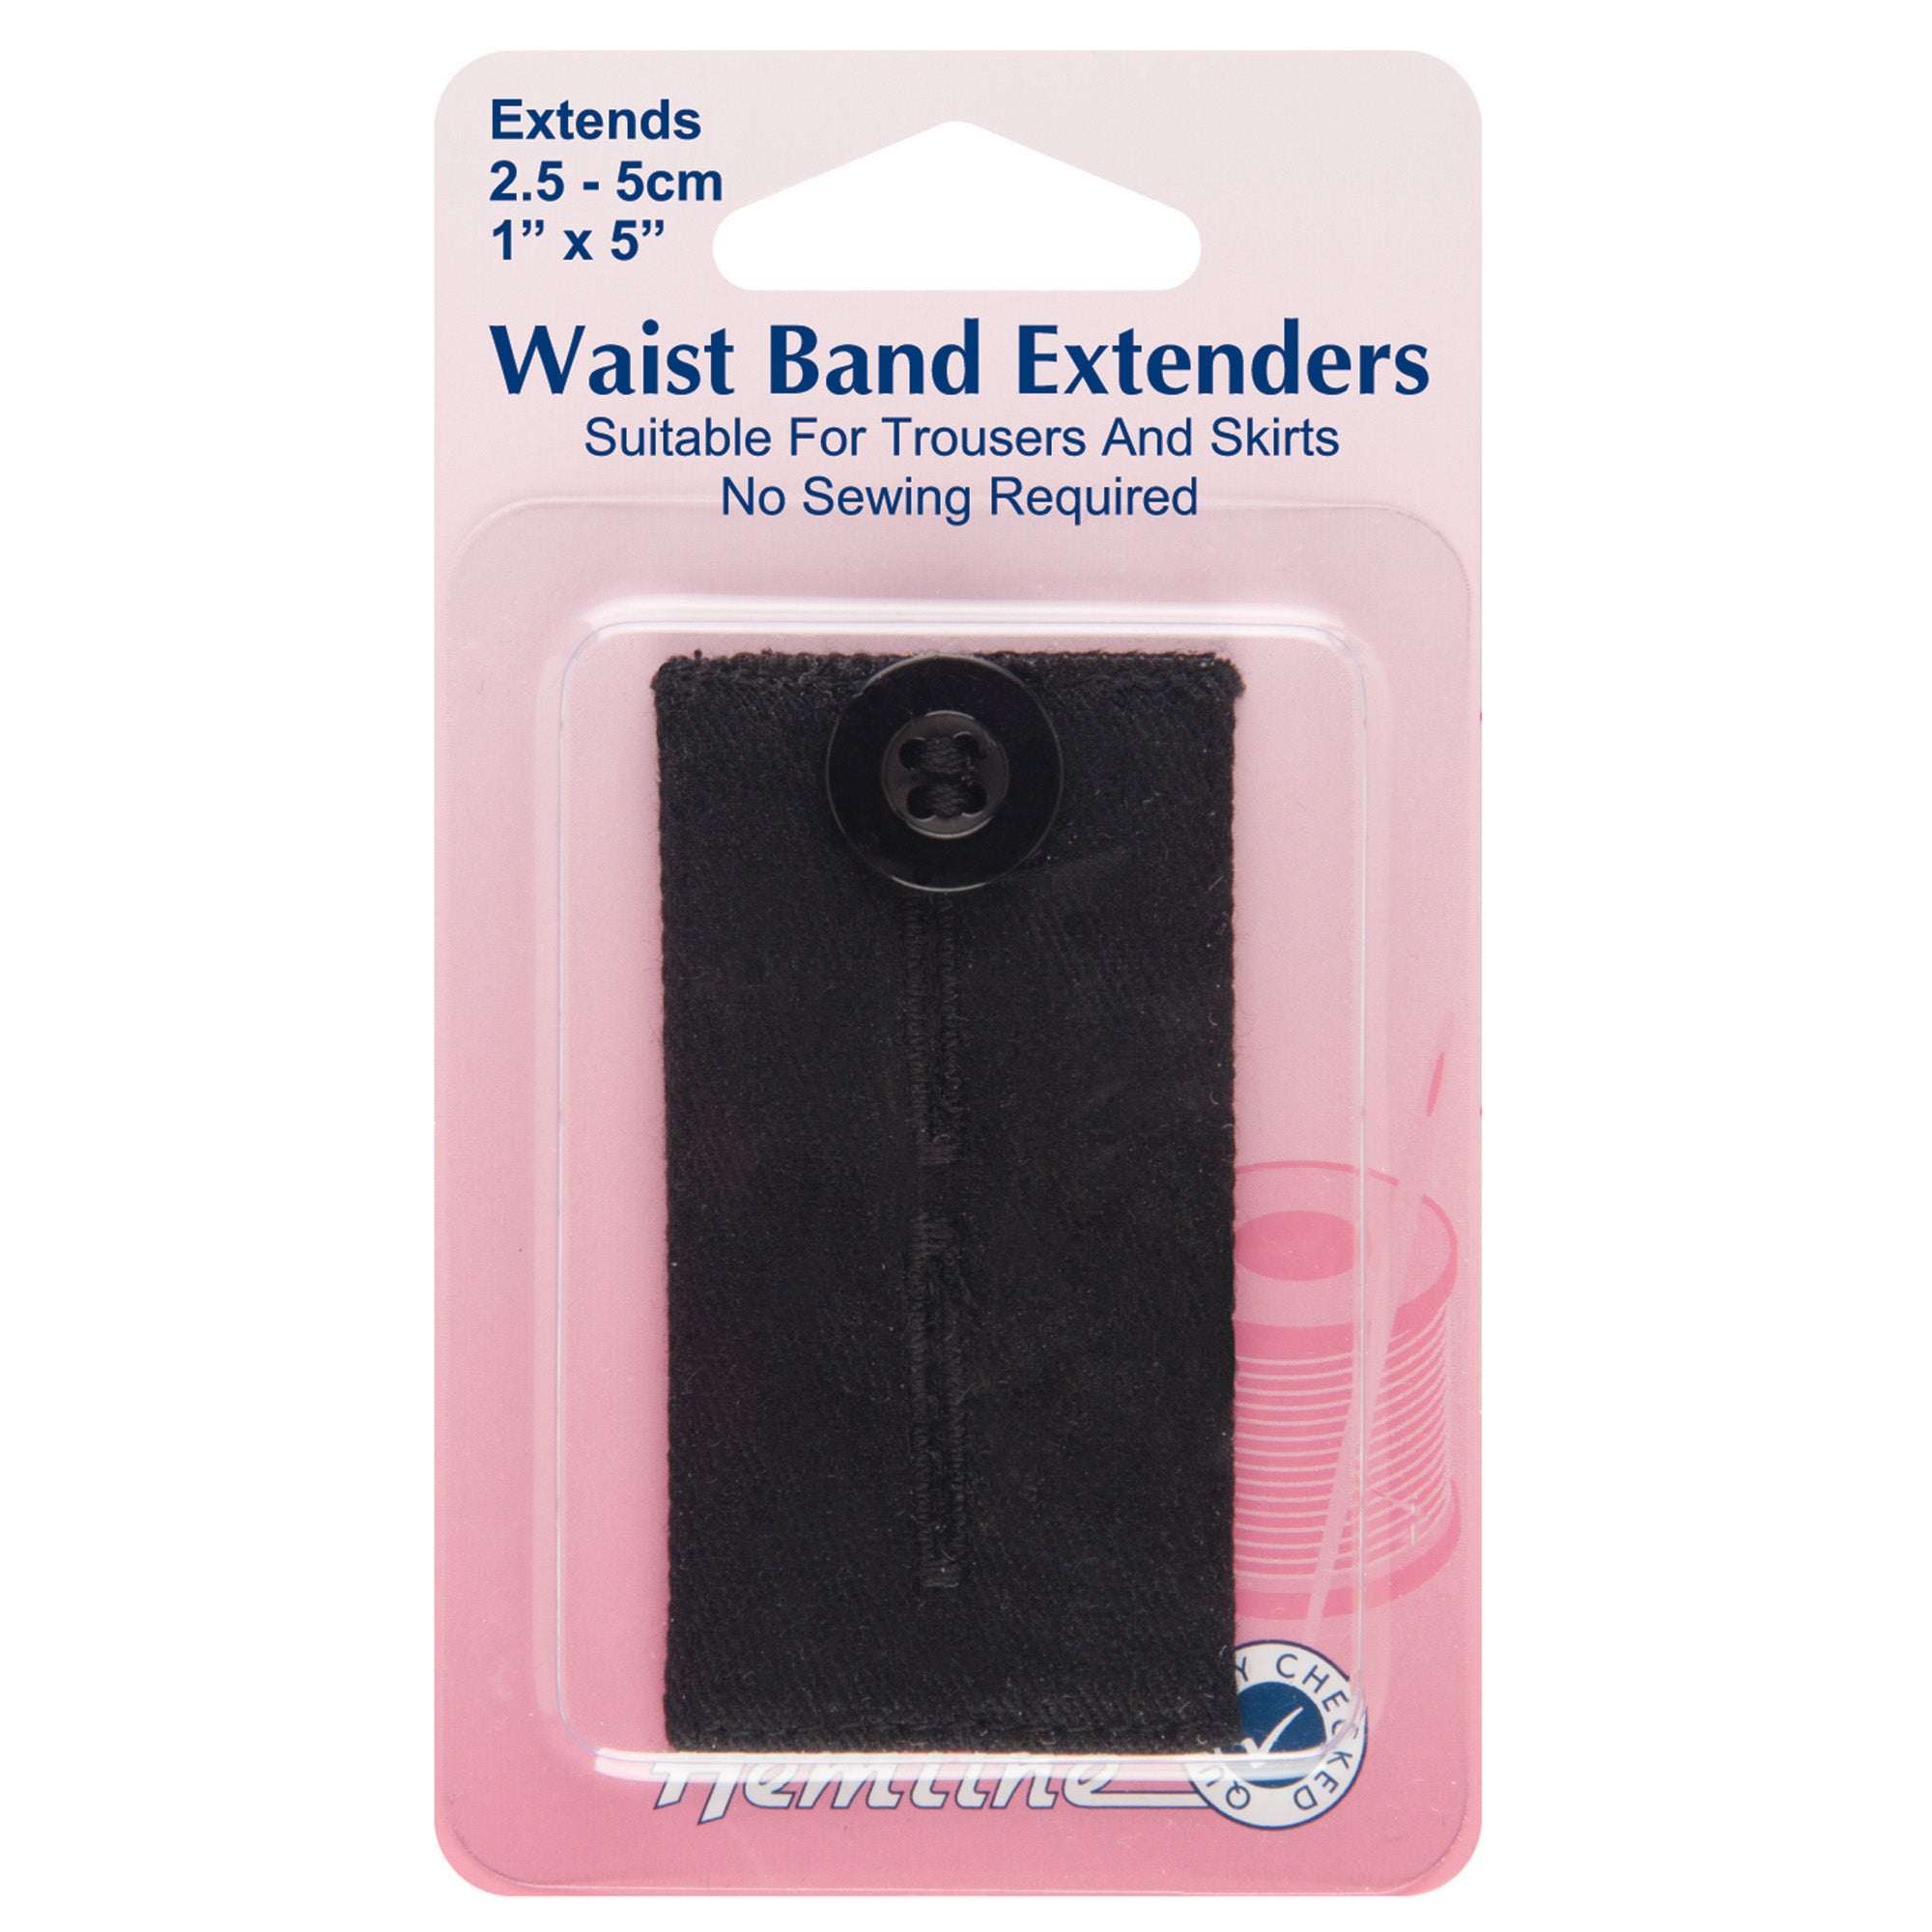 Buy Waist Extender online